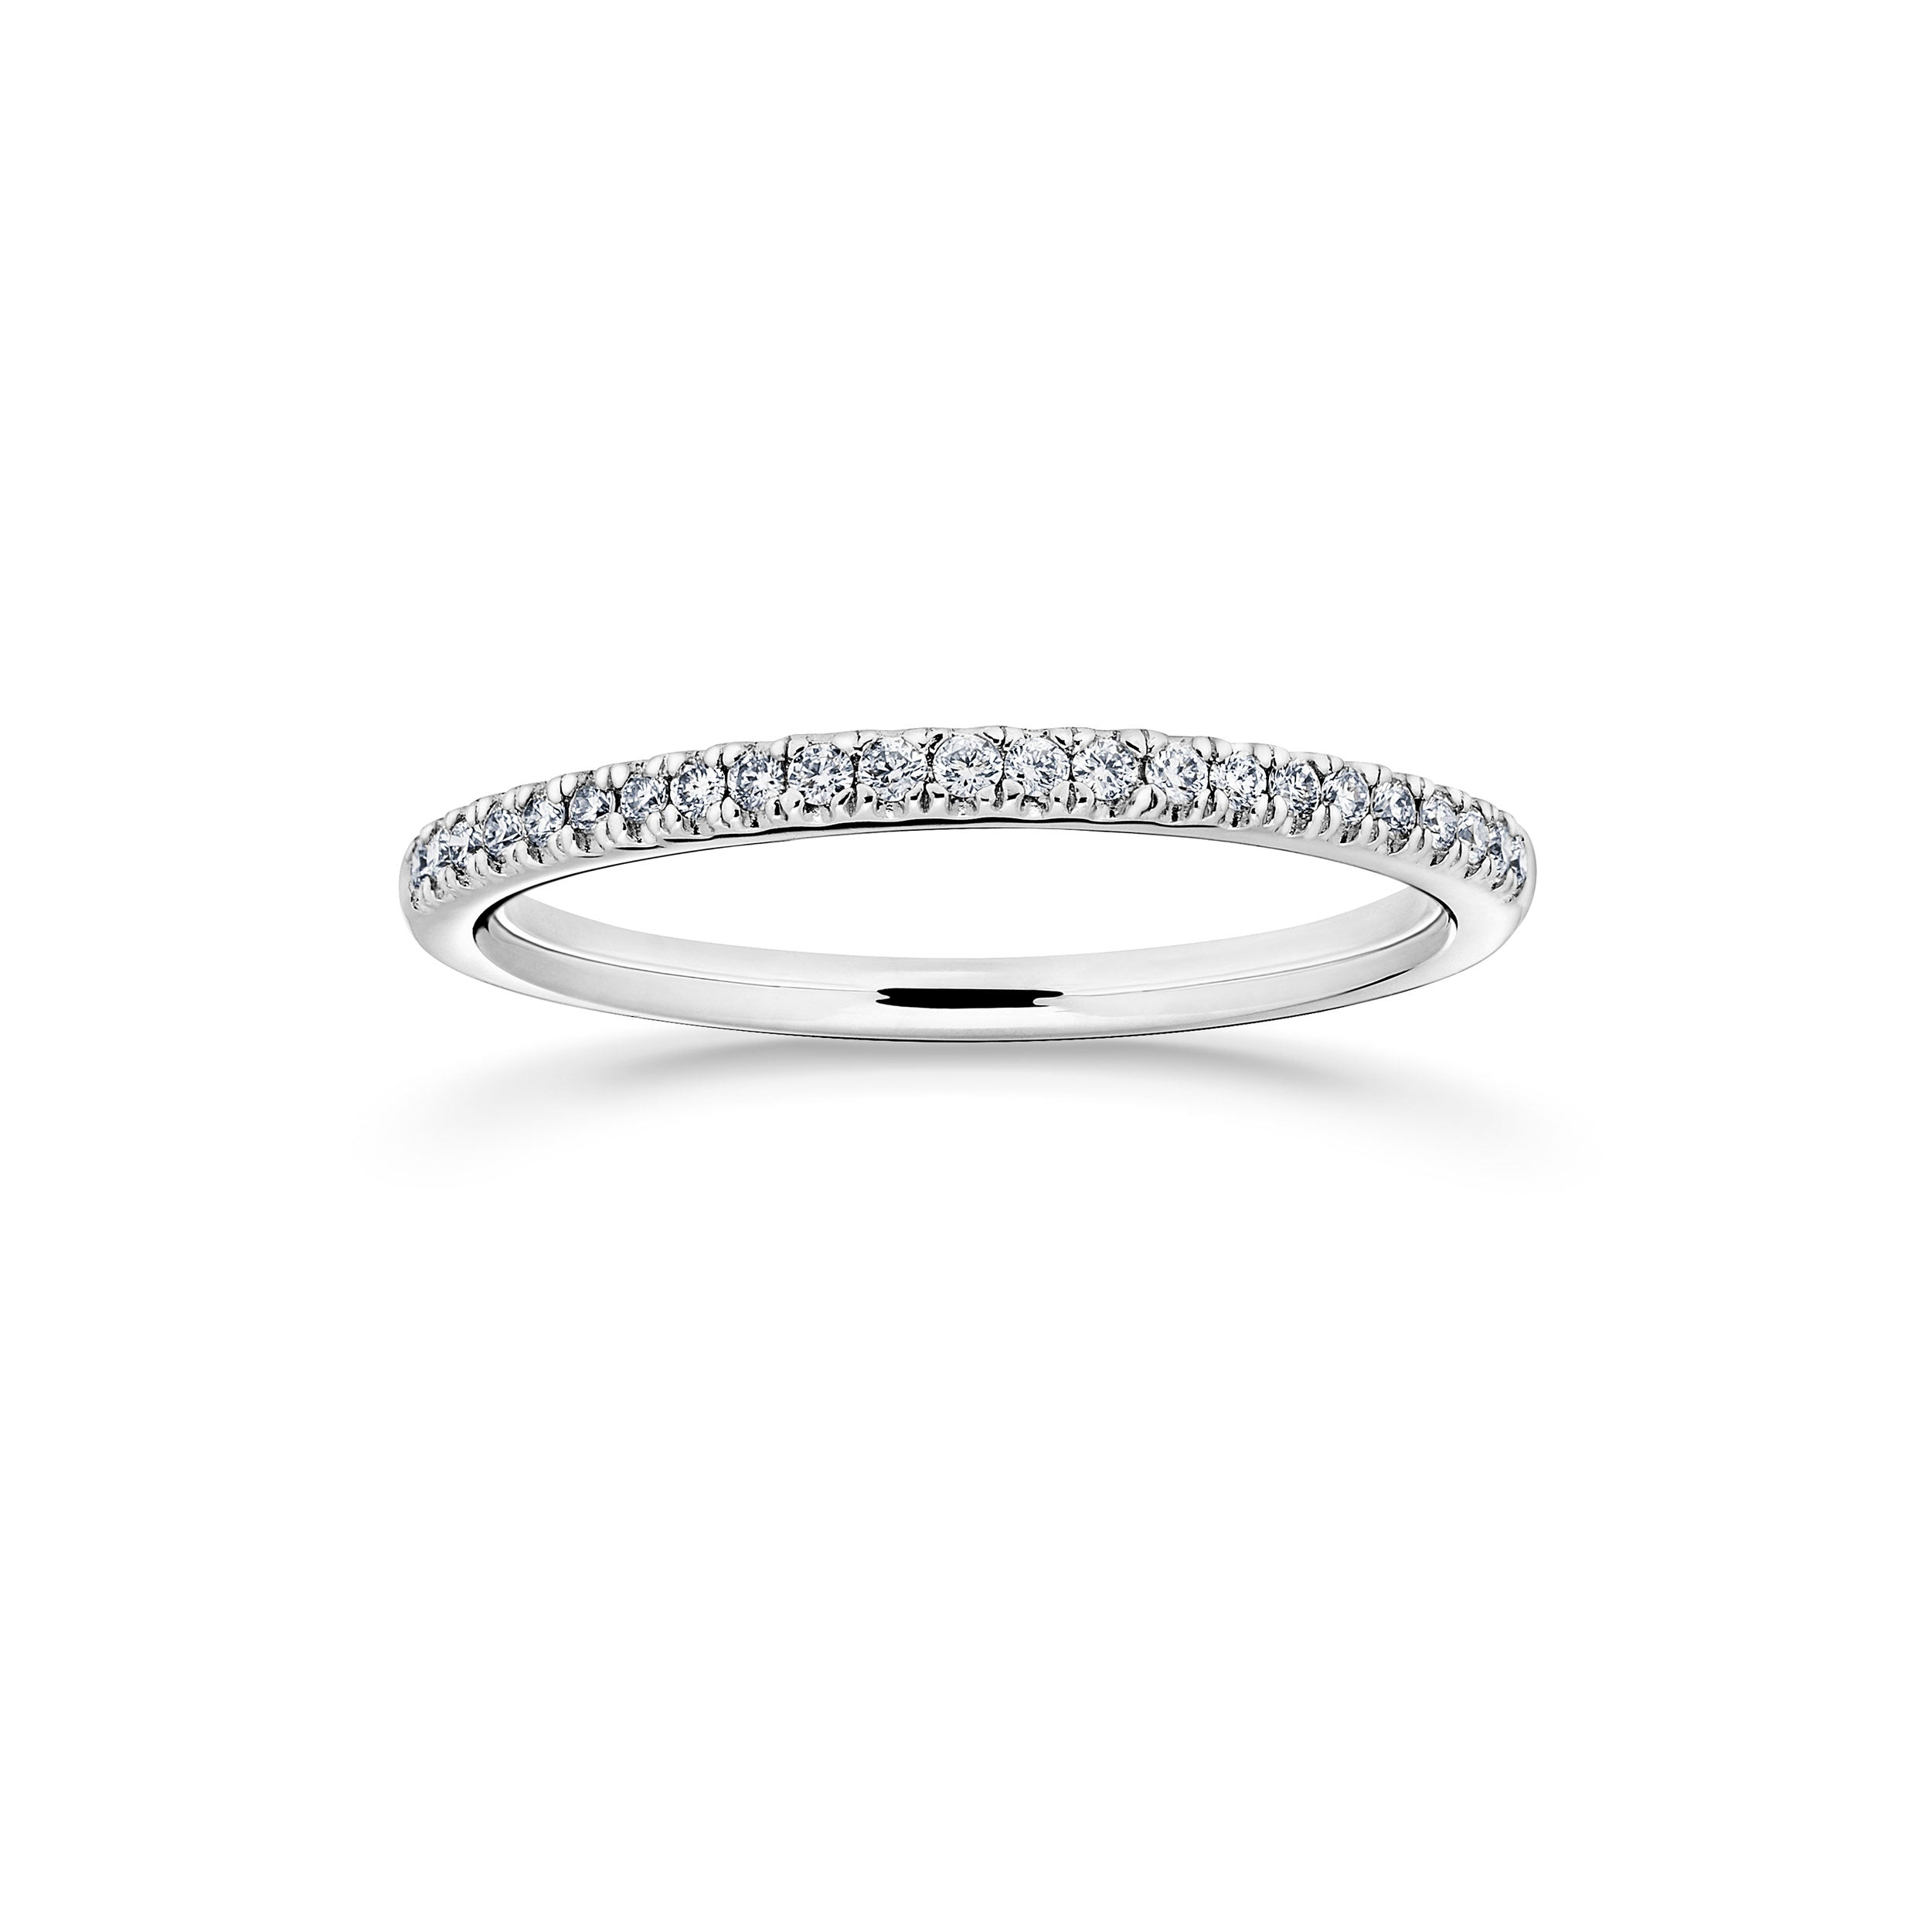 Onni 1.6 diamond ring